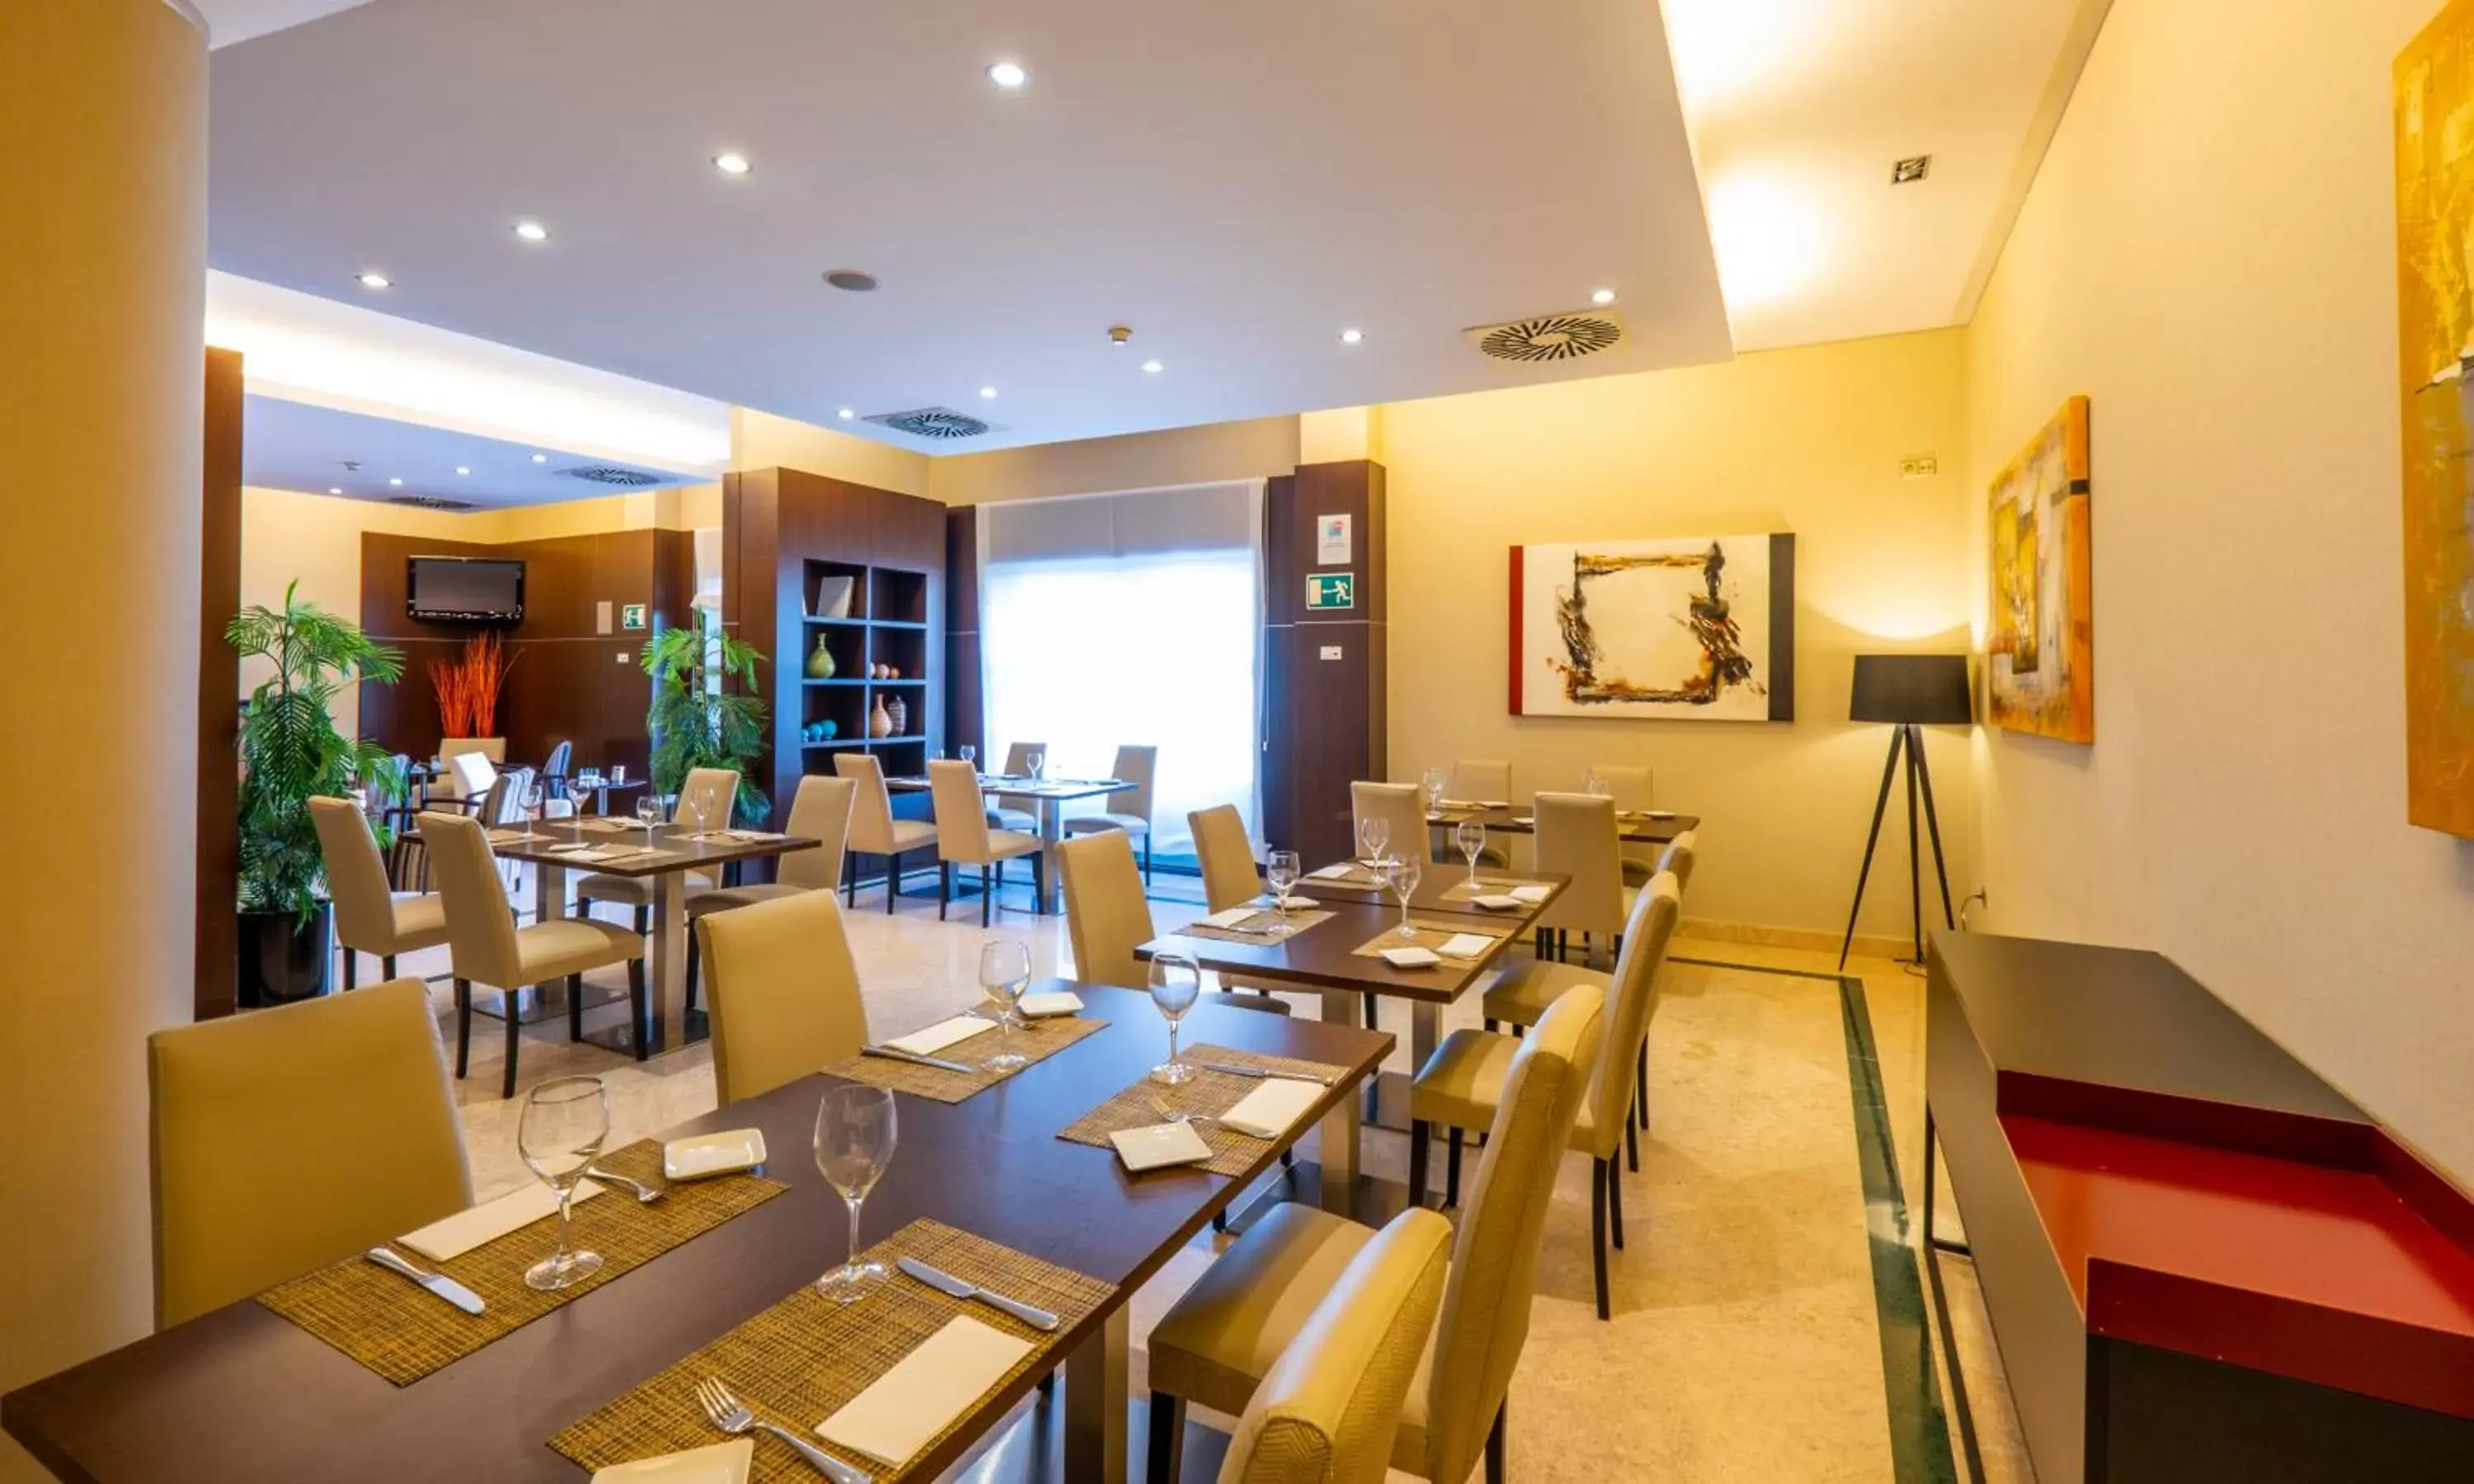 Restaurant/Places to Eat in Gran Hotel Attica21 Las Rozas